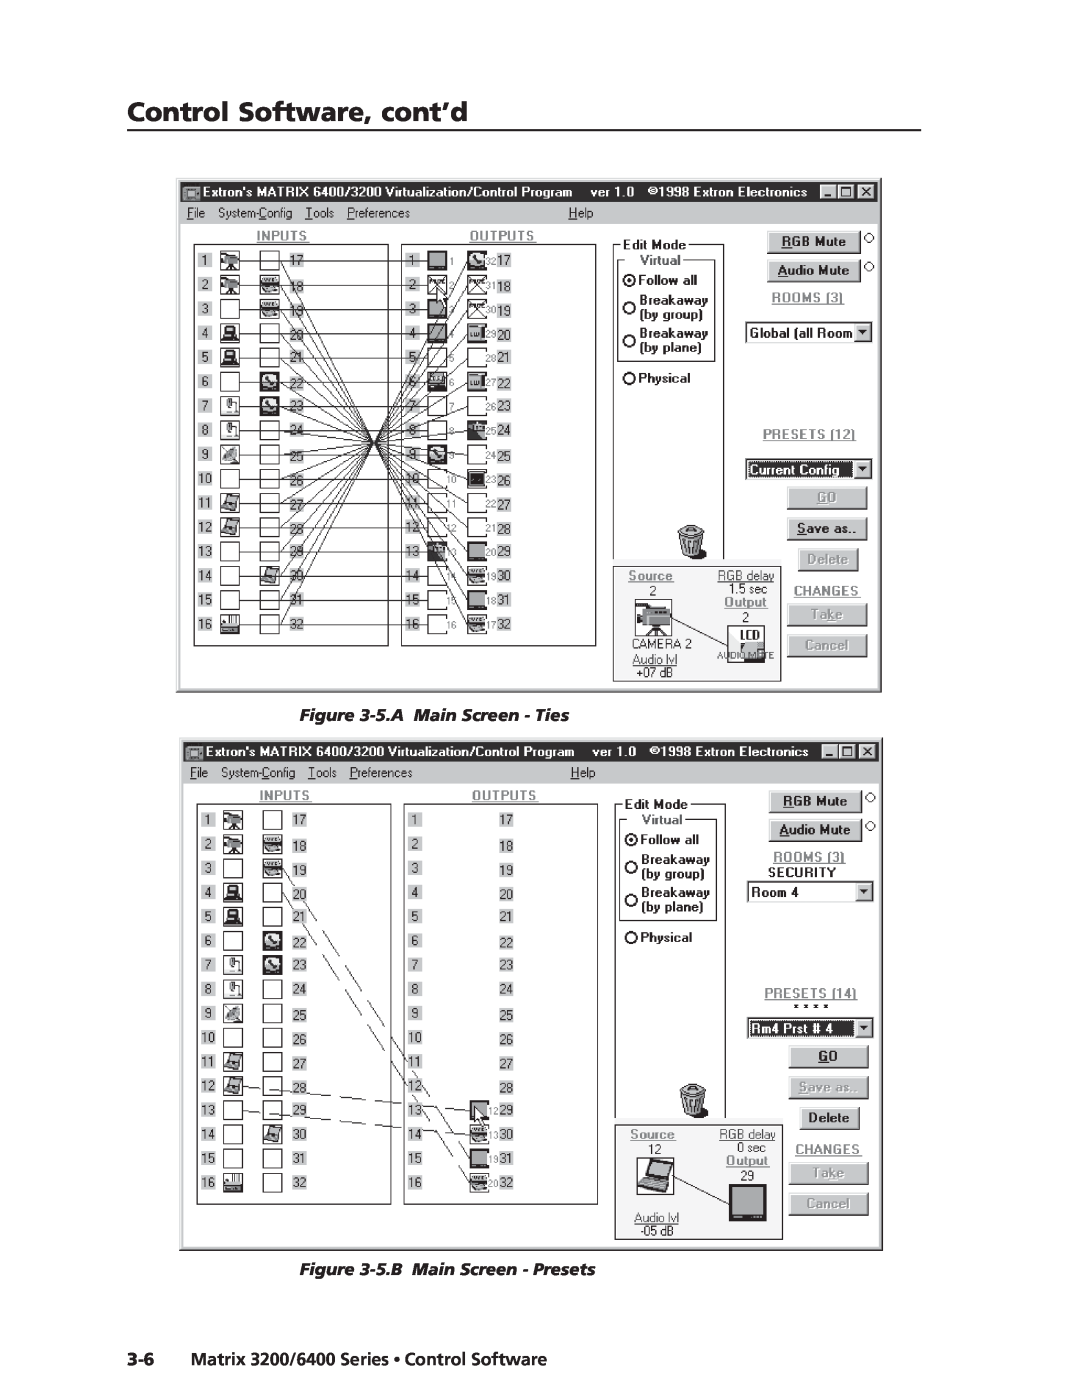 Extron electronic 3200s manual 5.A Main Screen - Ties -5.B Main Screen - Presets, Matrix 3200/6400 Series Control Software 